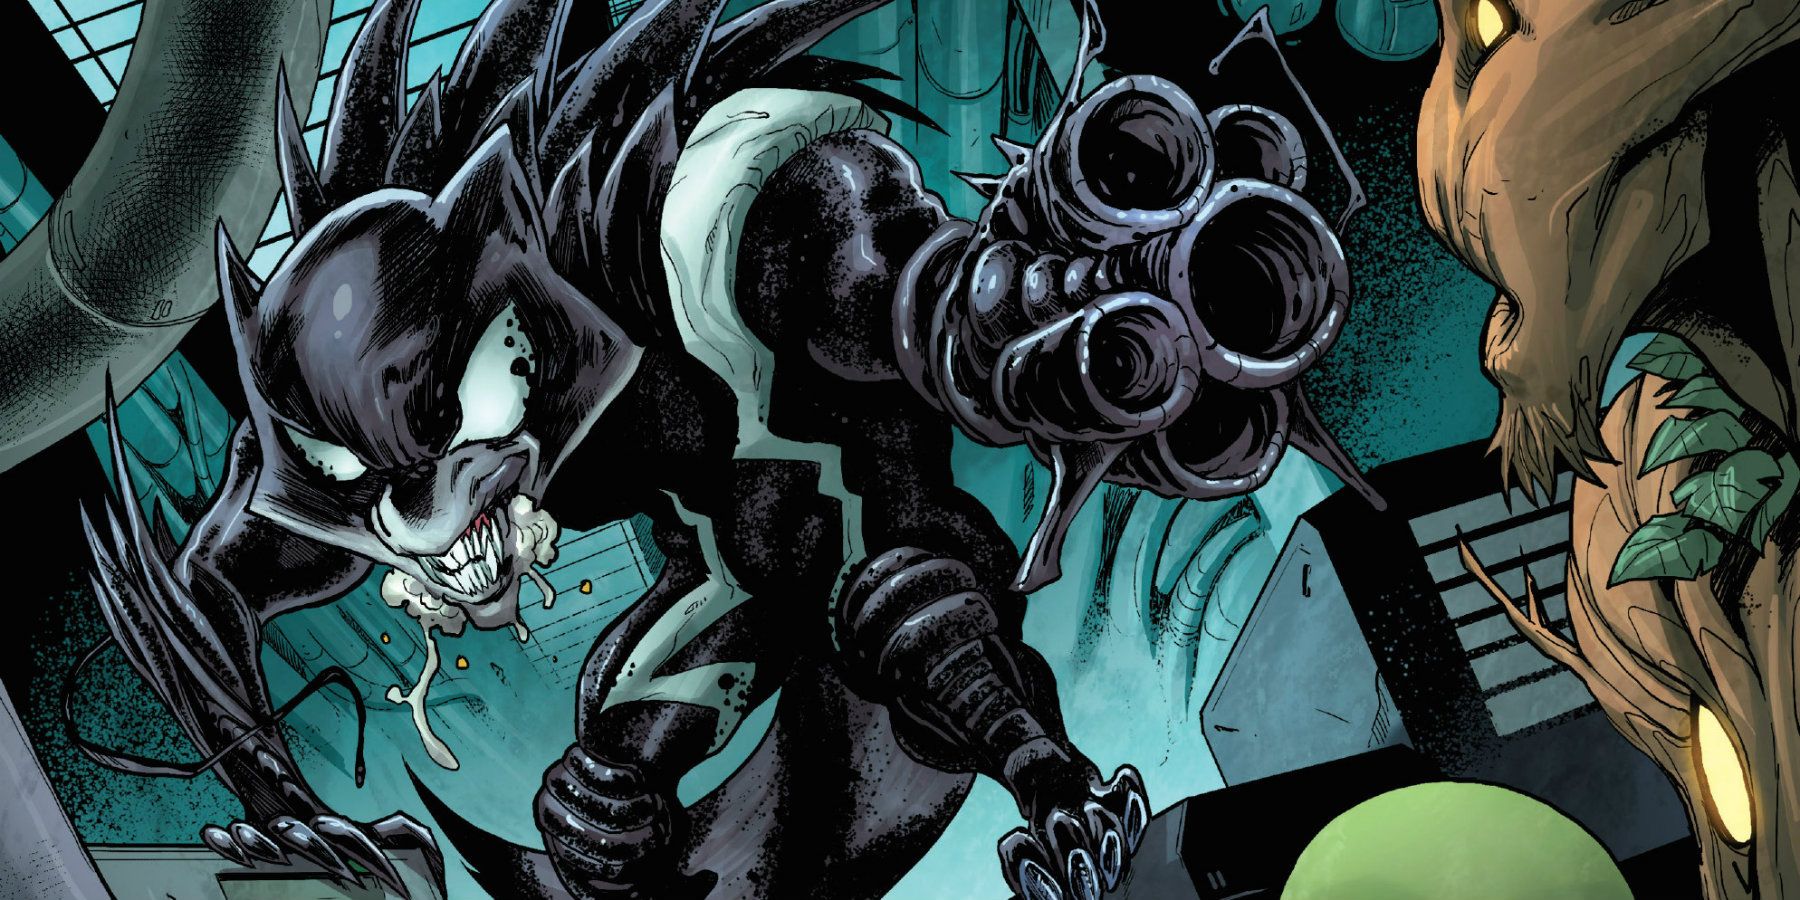 Rocket Raccoon hosts Venom and holds a gun in Marvel Comics